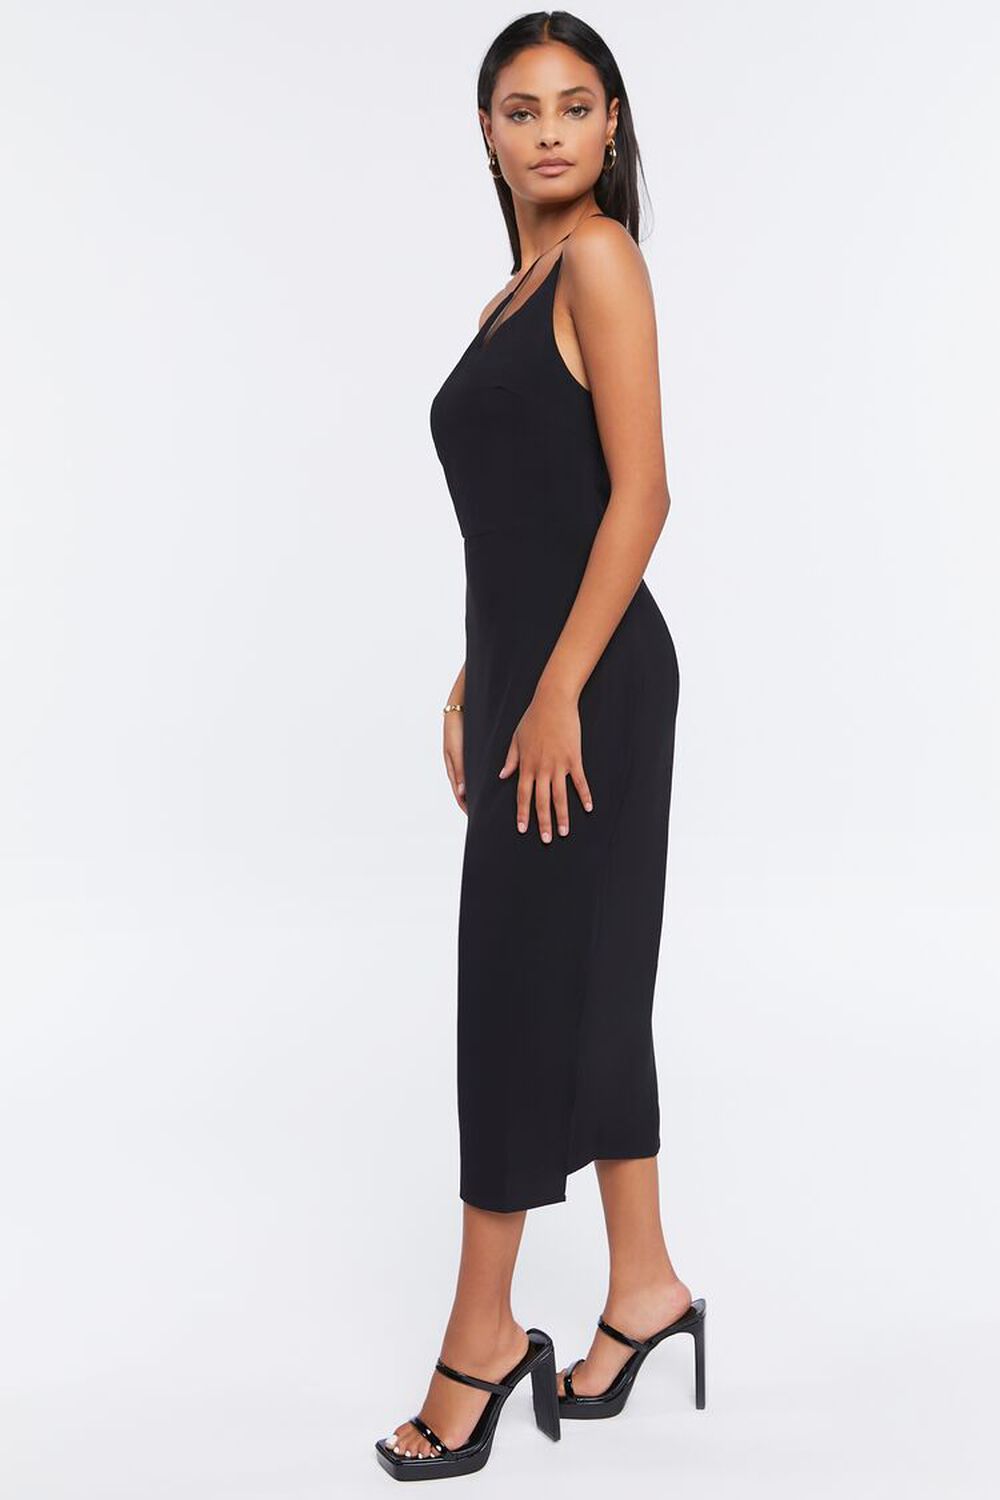 BLACK Cutout One-Shoulder Midi Dress, image 2